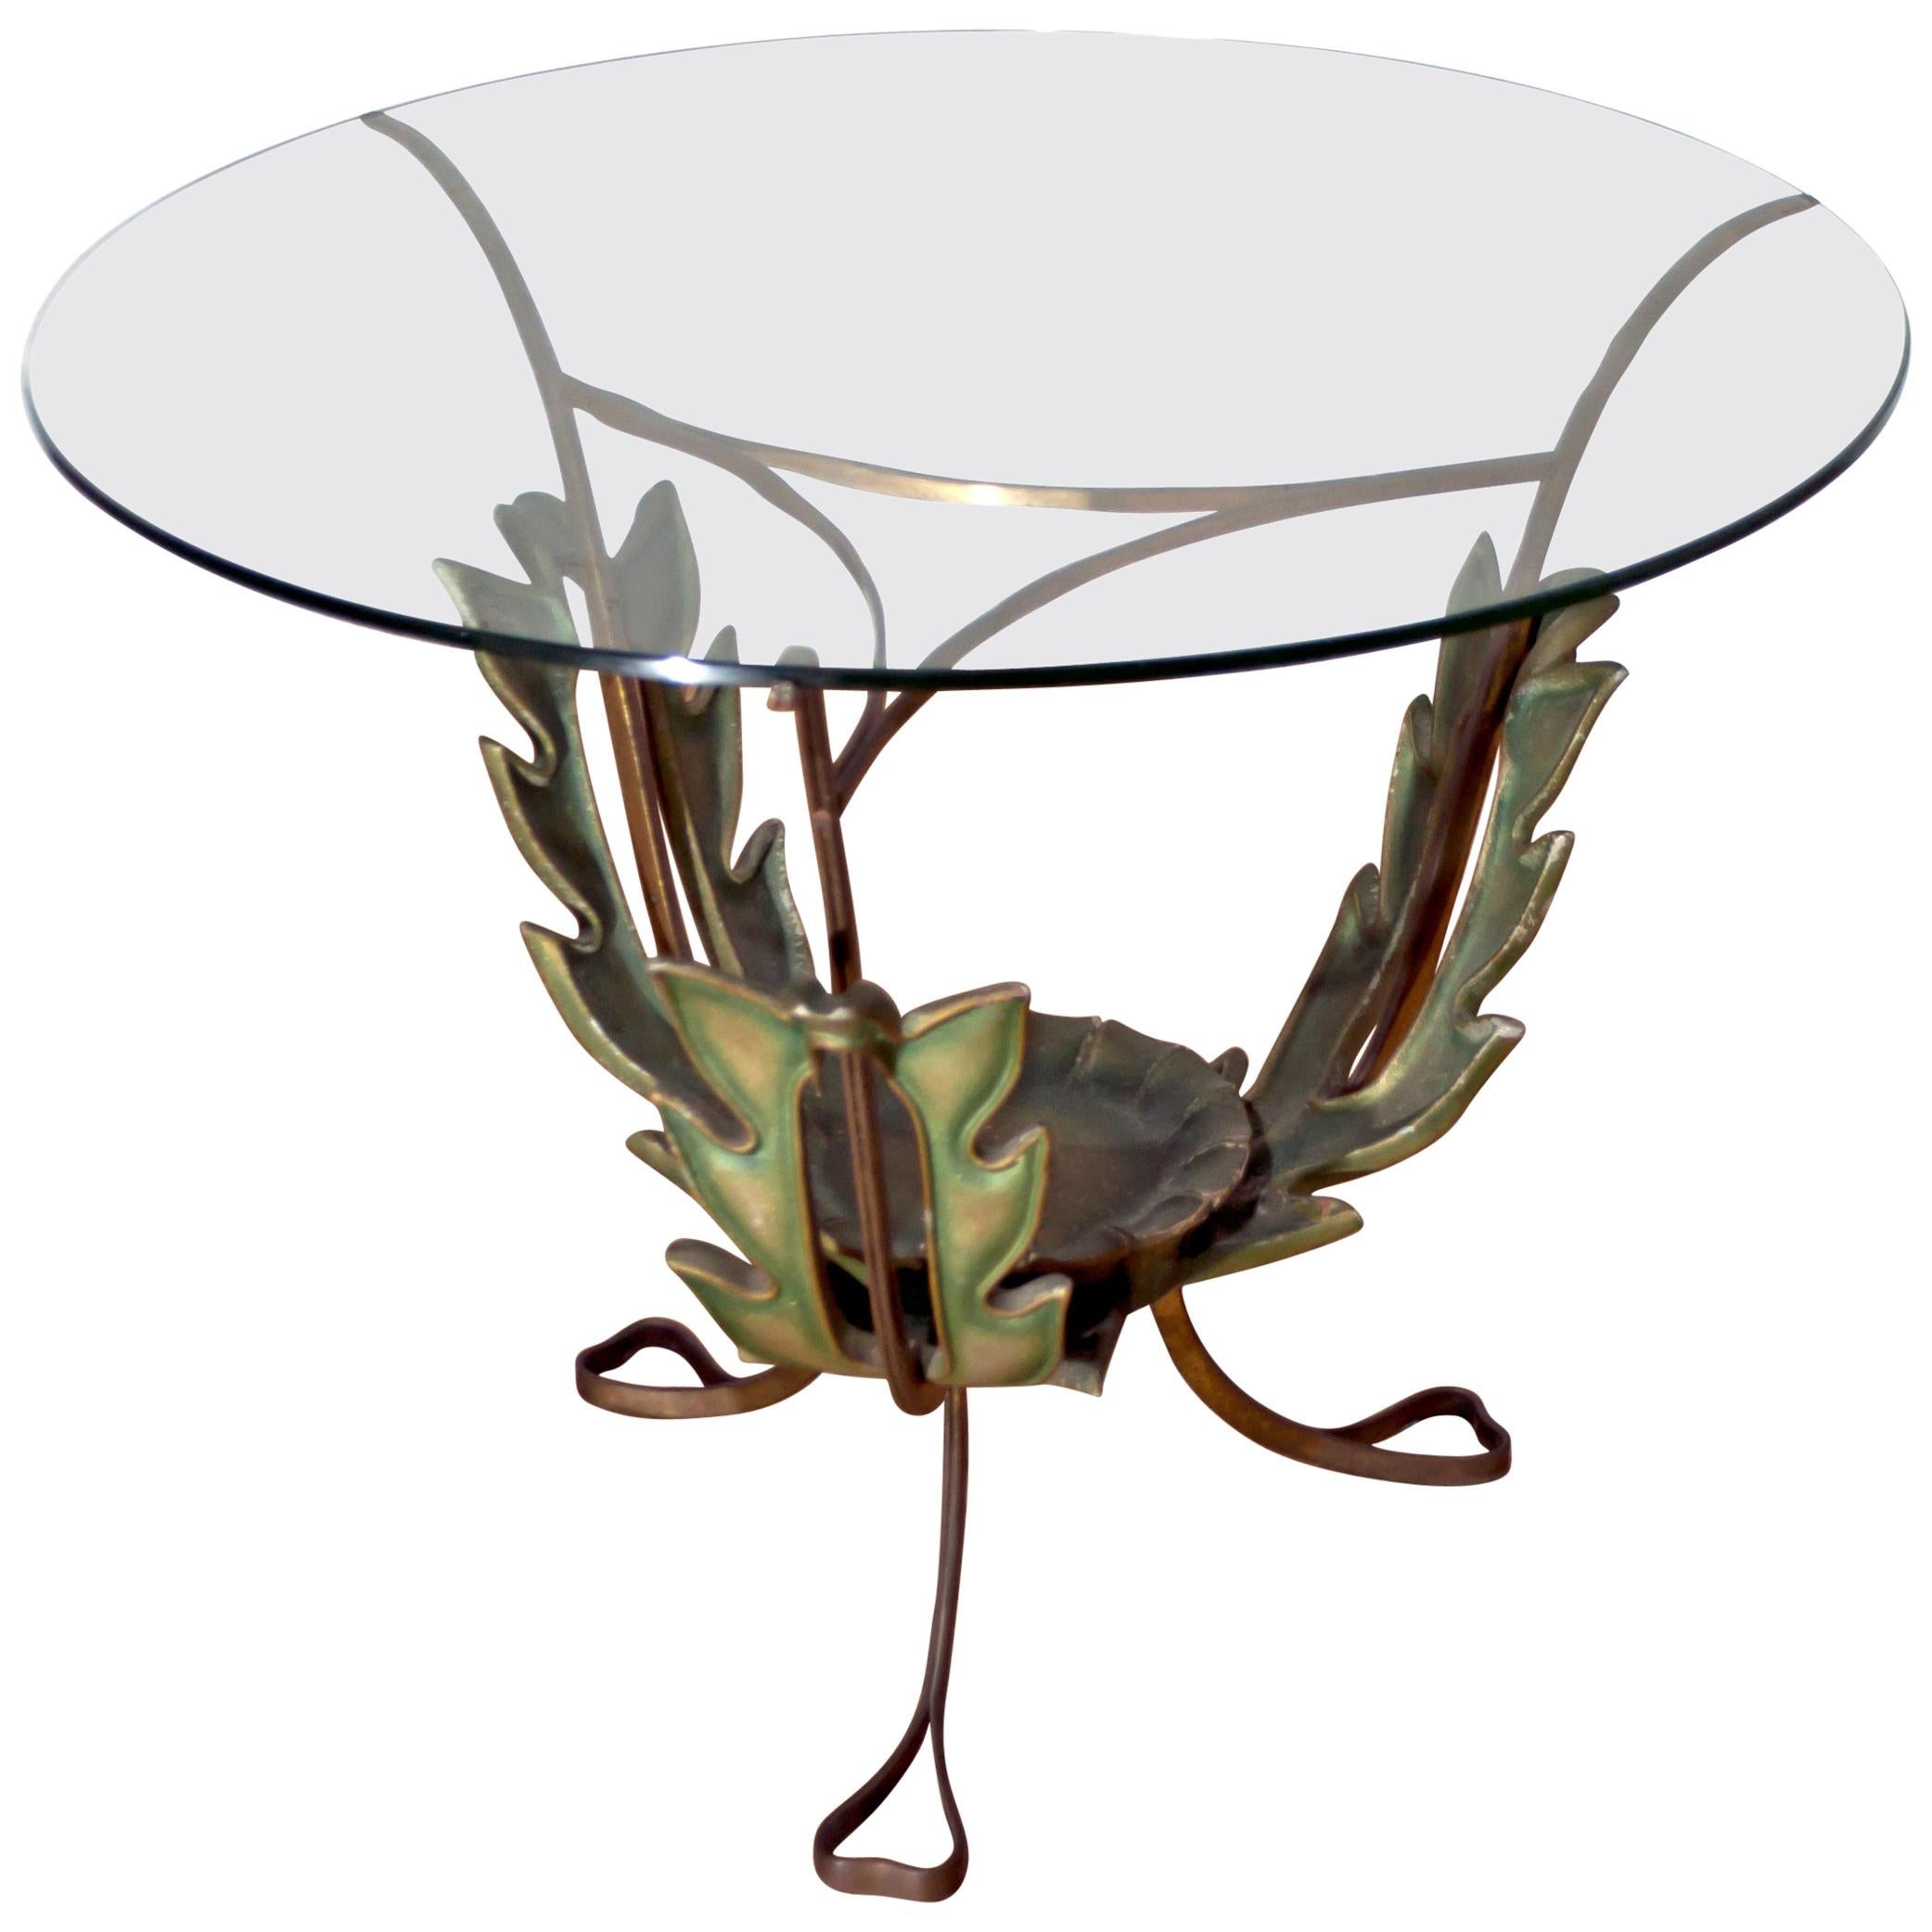 Pierluigi Colli Midcentury Italian Brass and Wood Coffee Table, 1950s